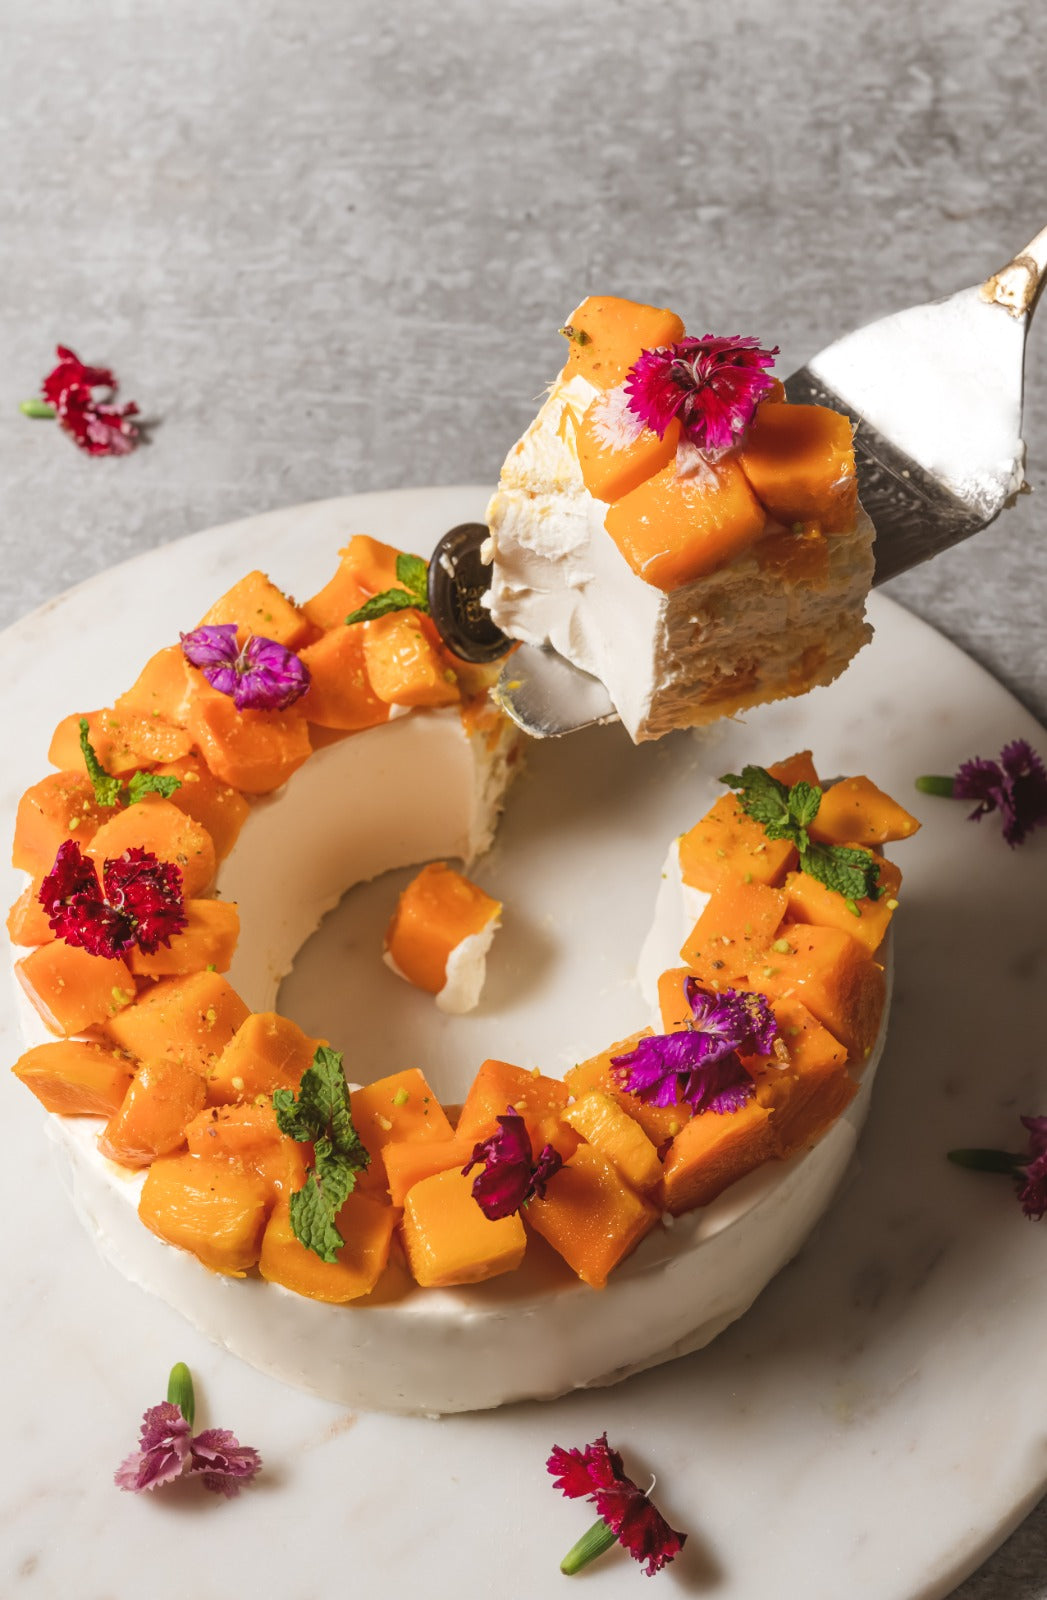 Bake for Happy Kids: Cheesecake like Mango Yogurt Chiffon Cake